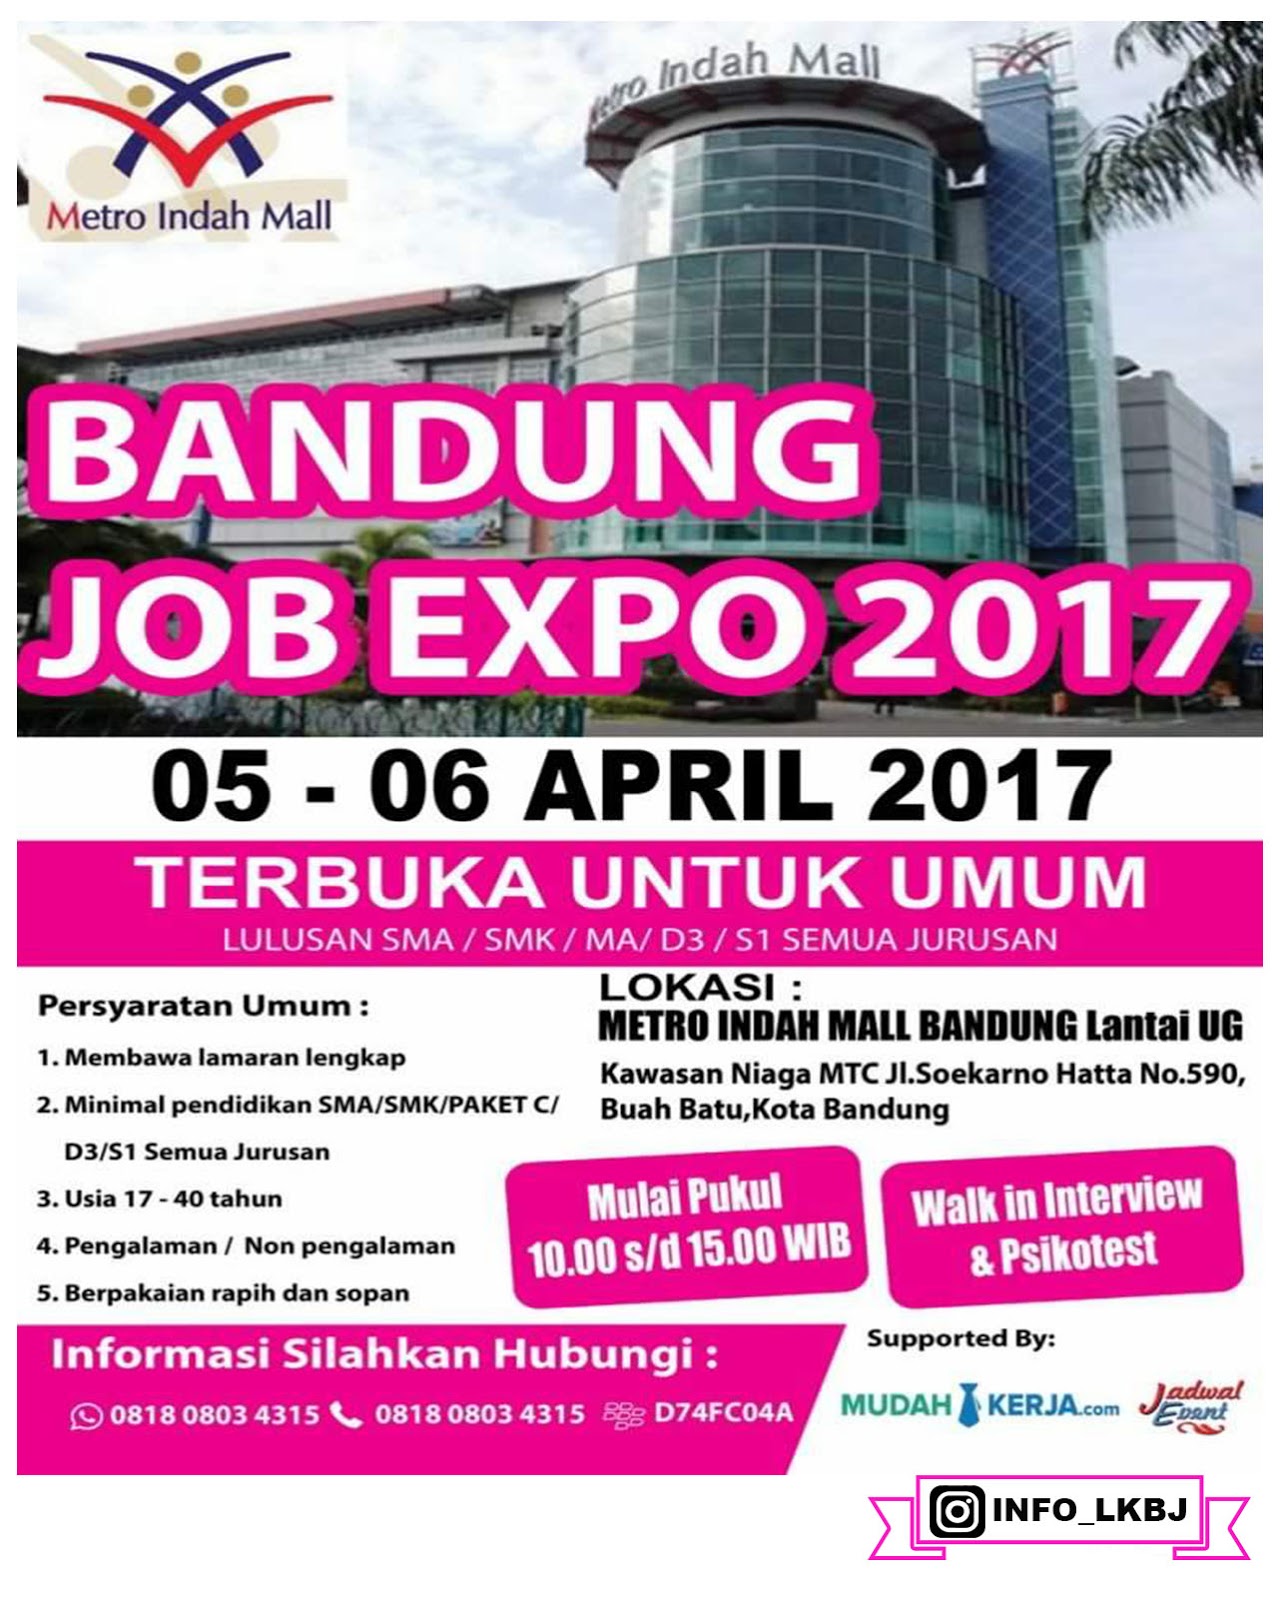 BANDUNG JOB EXPO 2017 - BursaKerja